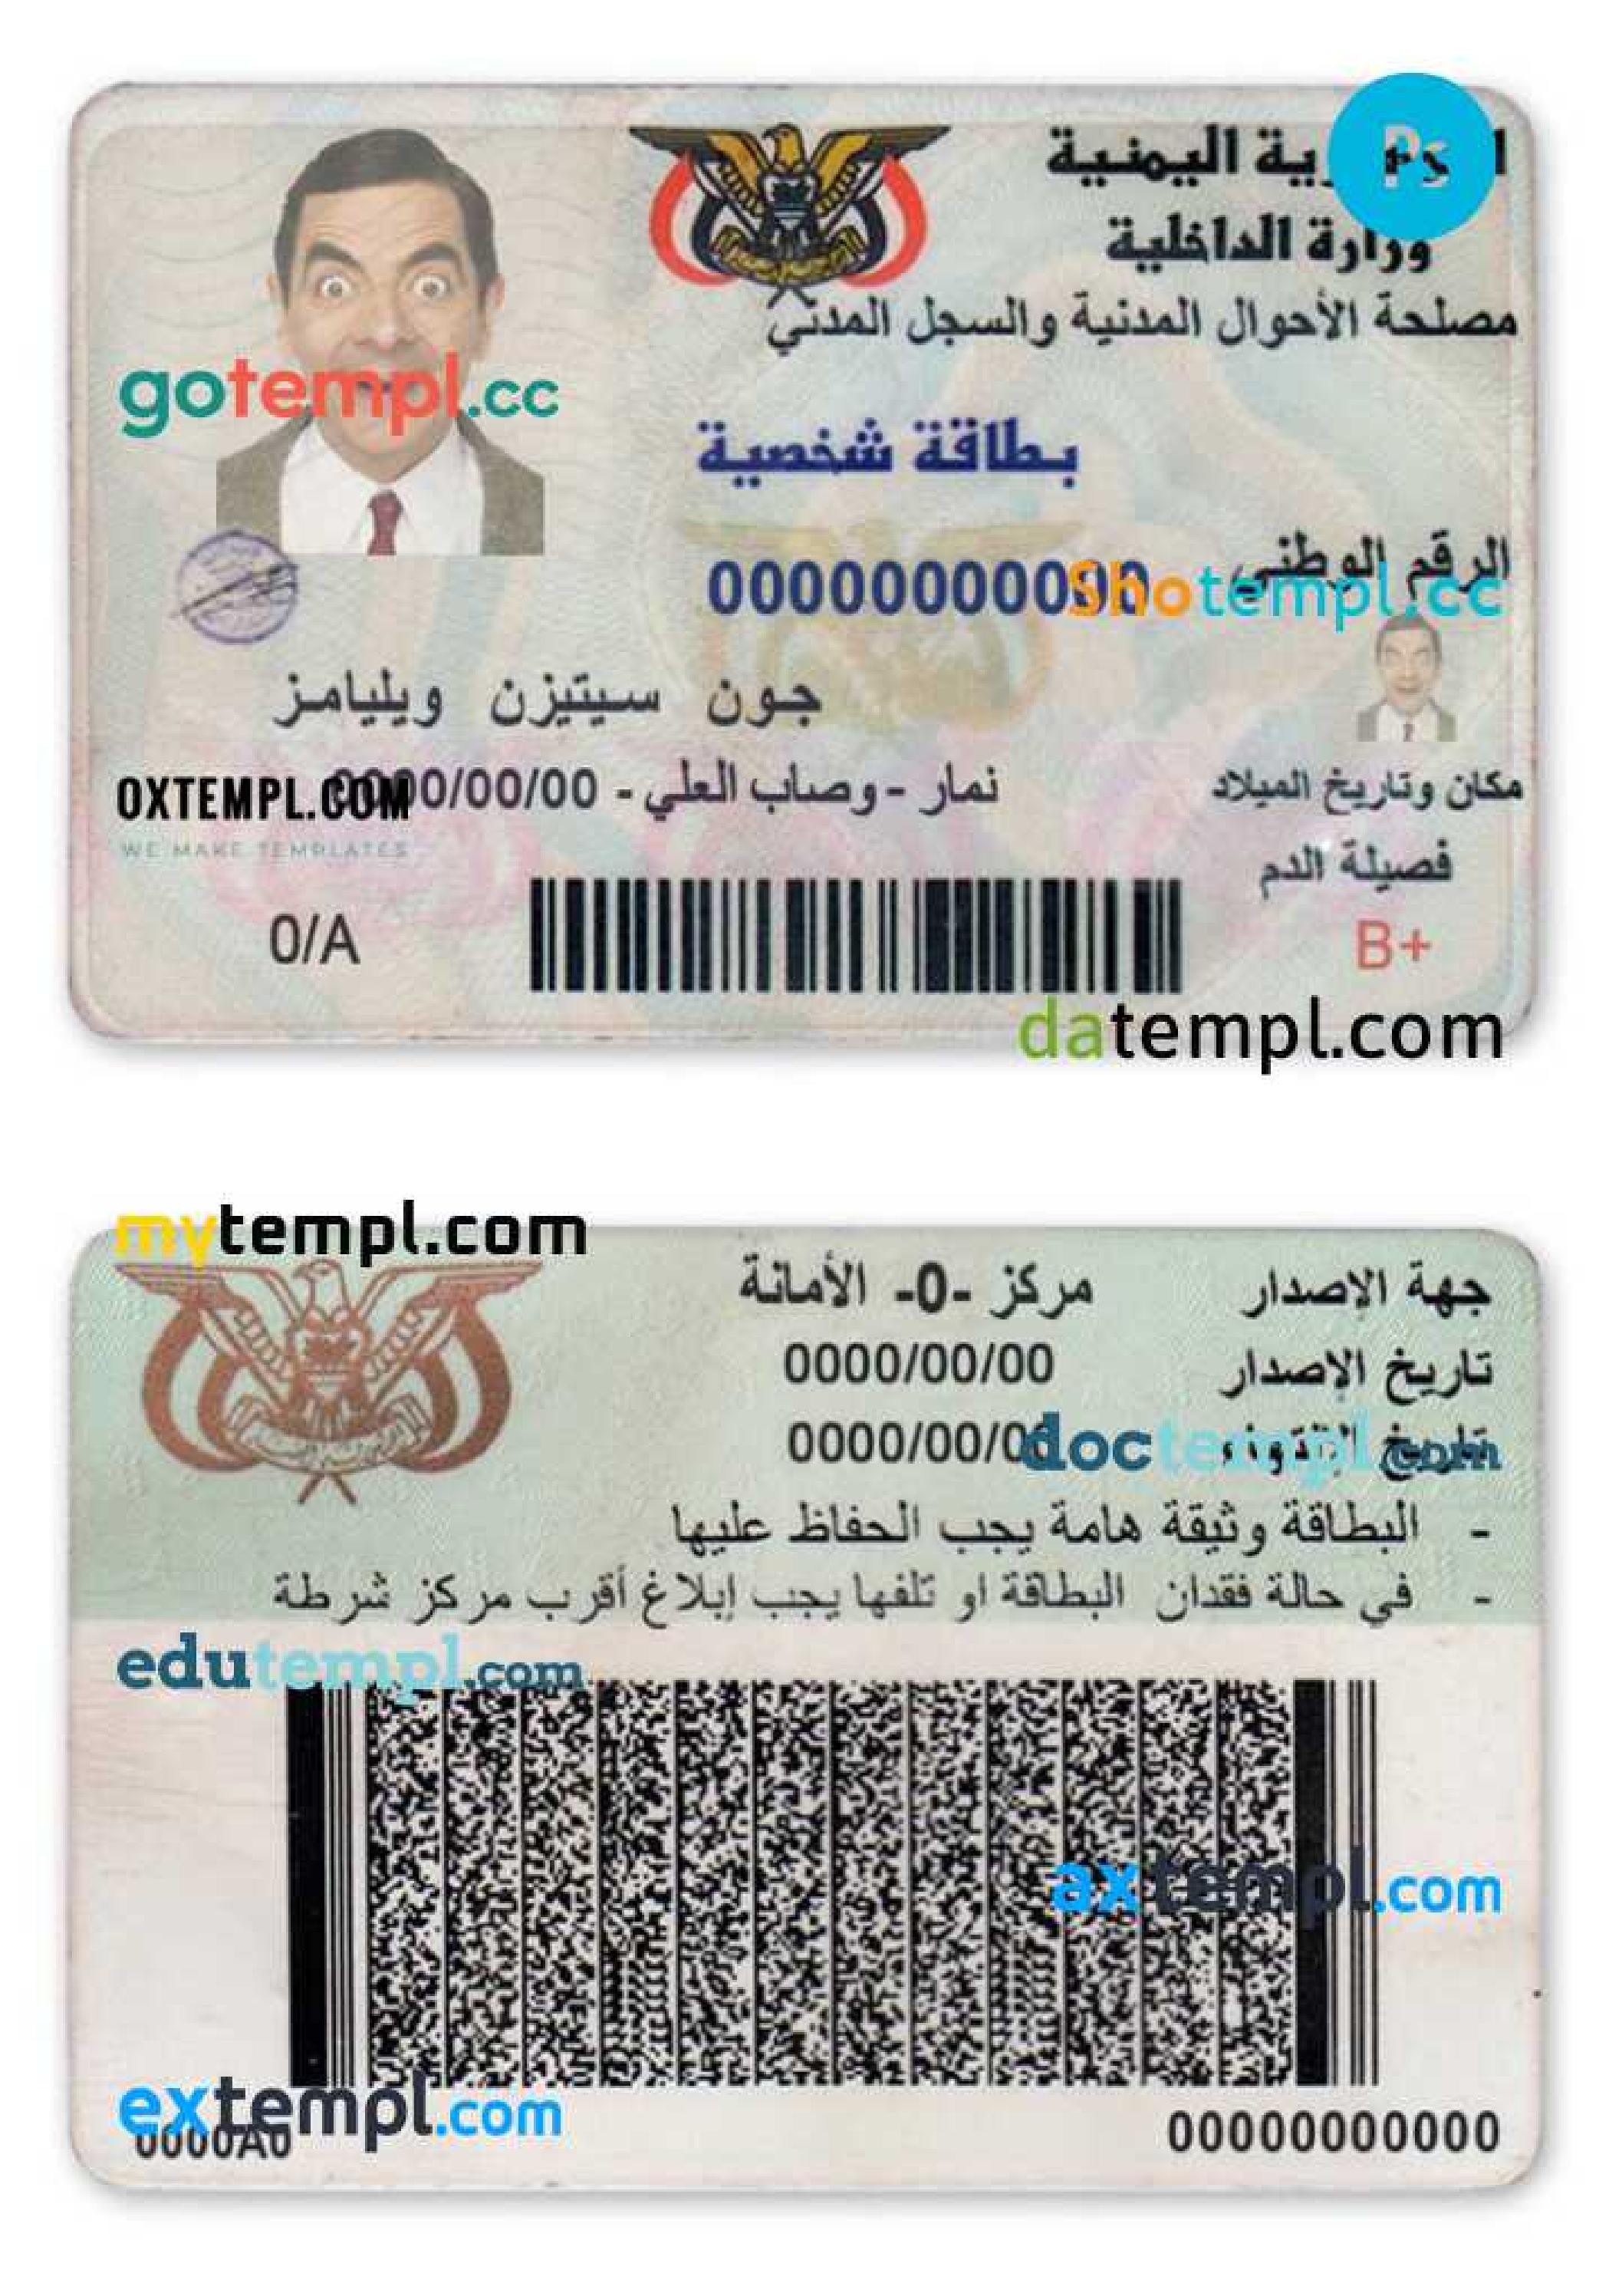 Yemen id card templates